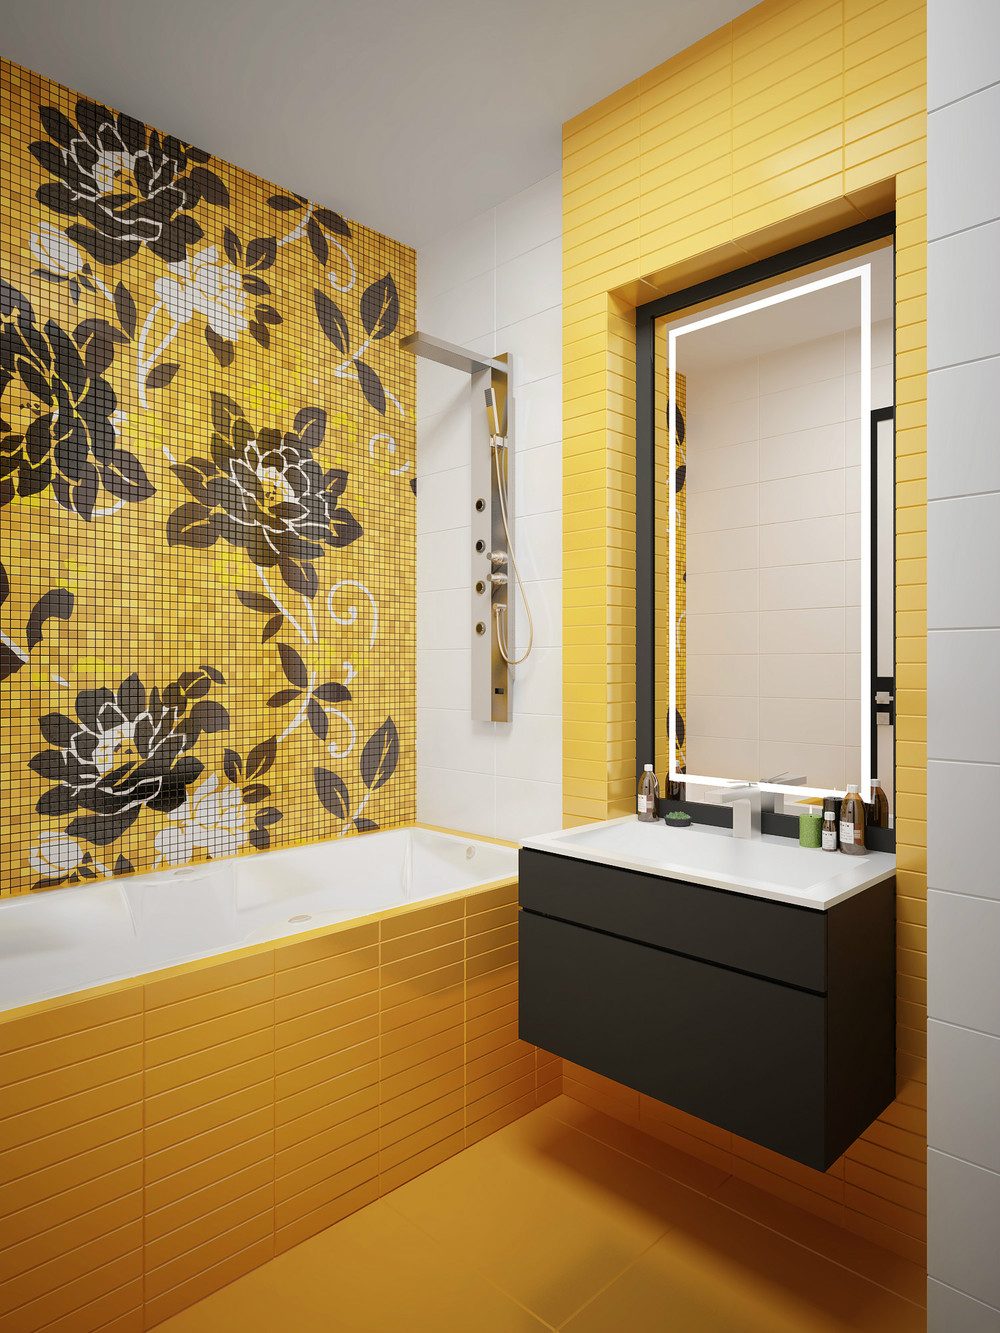 Желто-черно-белая маленькая ванная комната